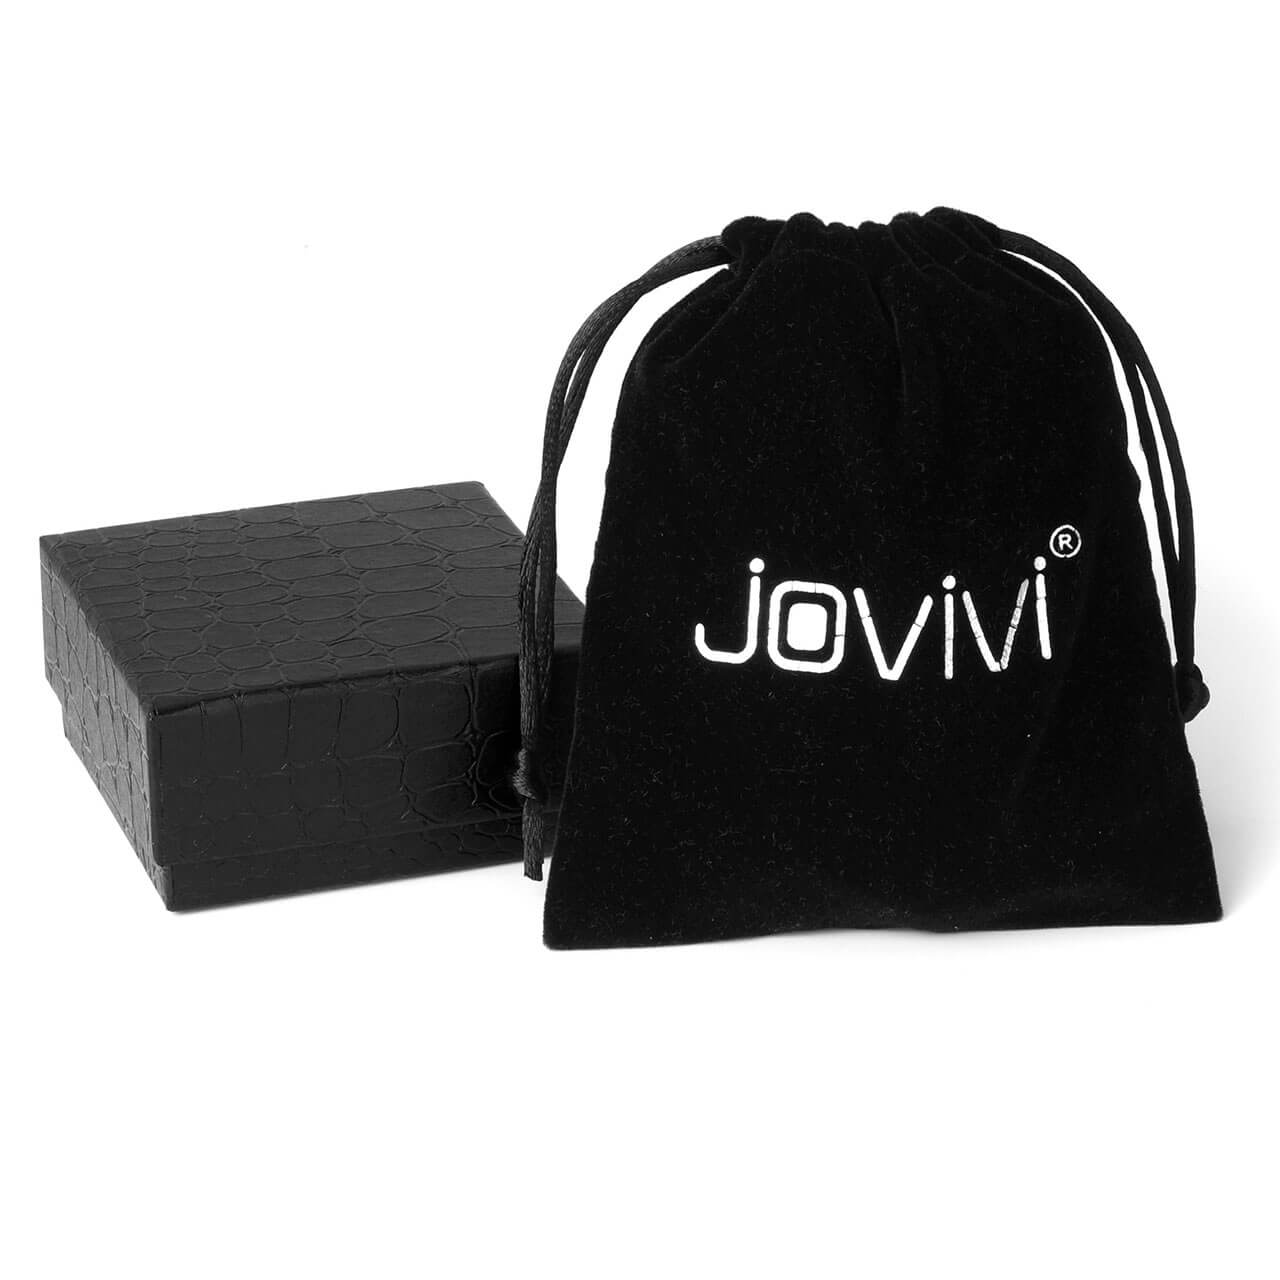 Jovivi customized cylinder urn keychain set with gift box, jnf000701